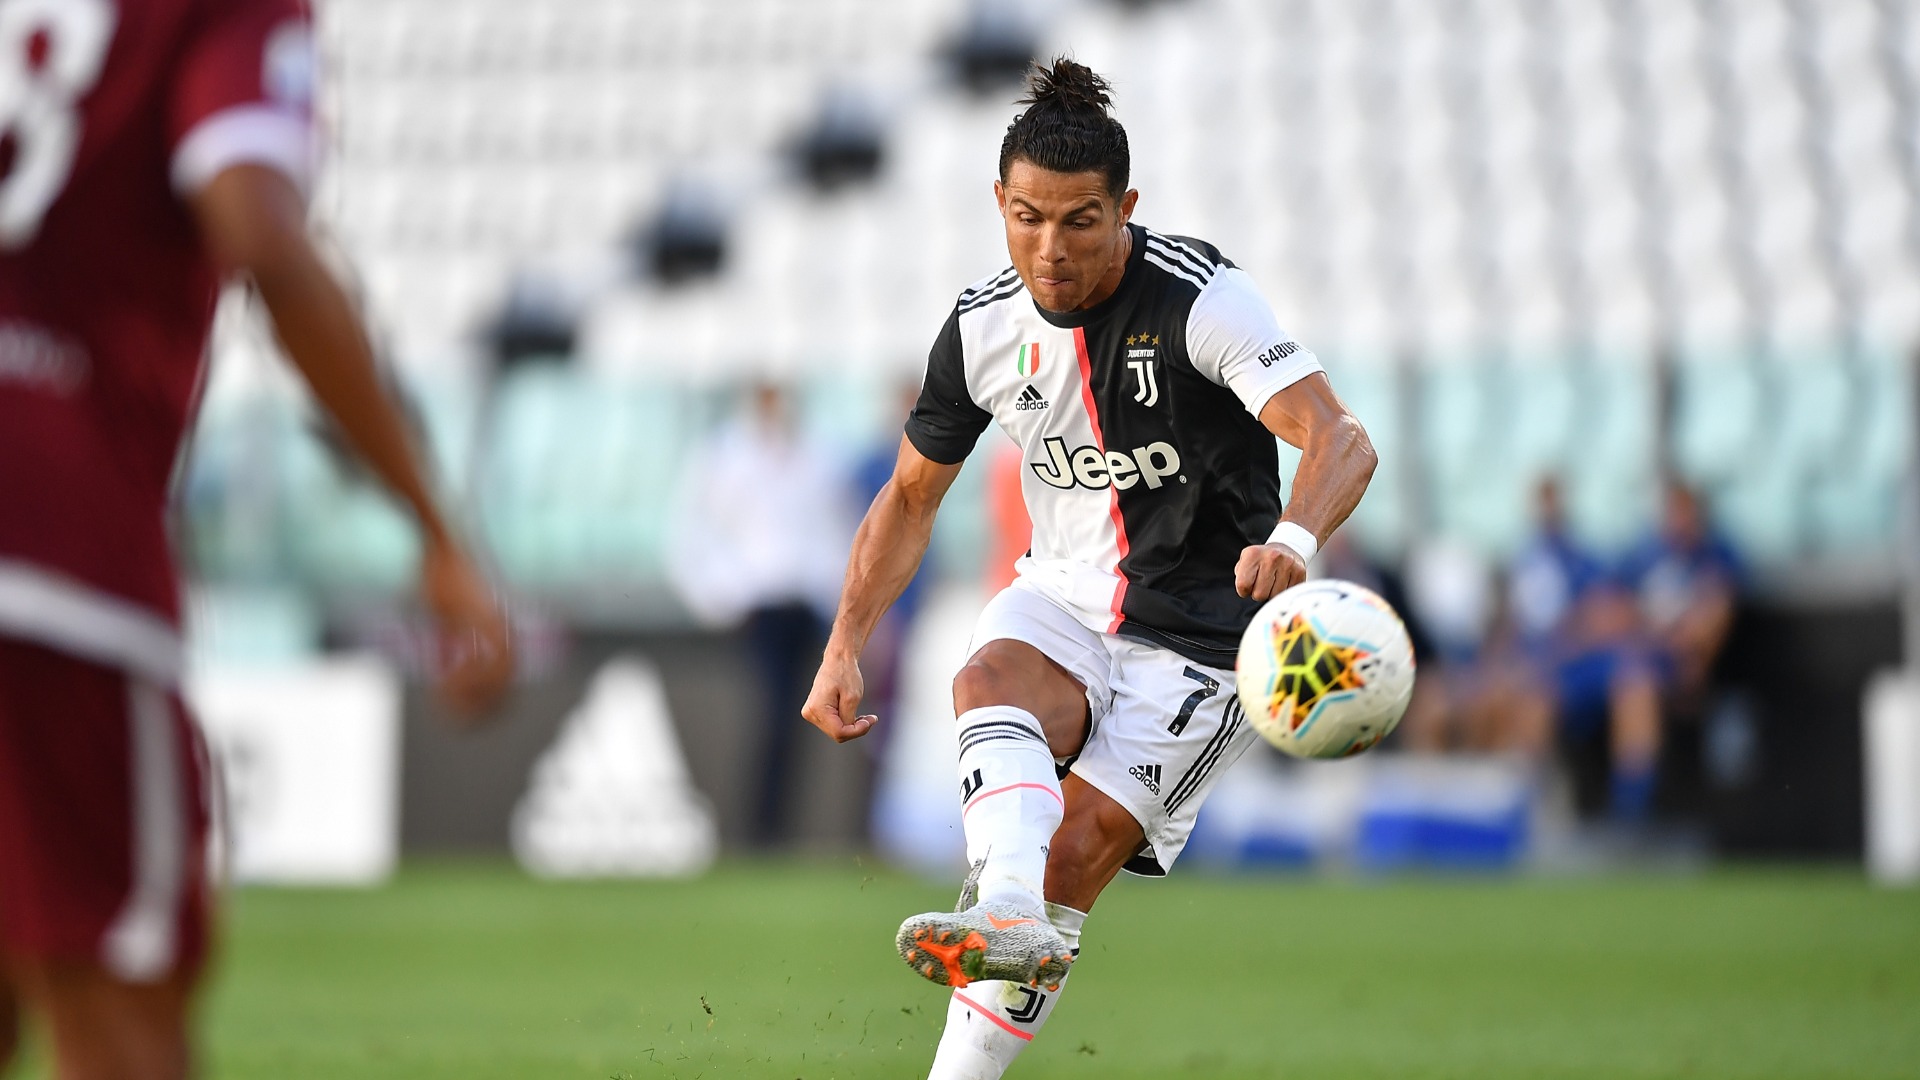 Serie A: Juventus 4-1 Torino - Ronaldo impresses, Buffon makes ...